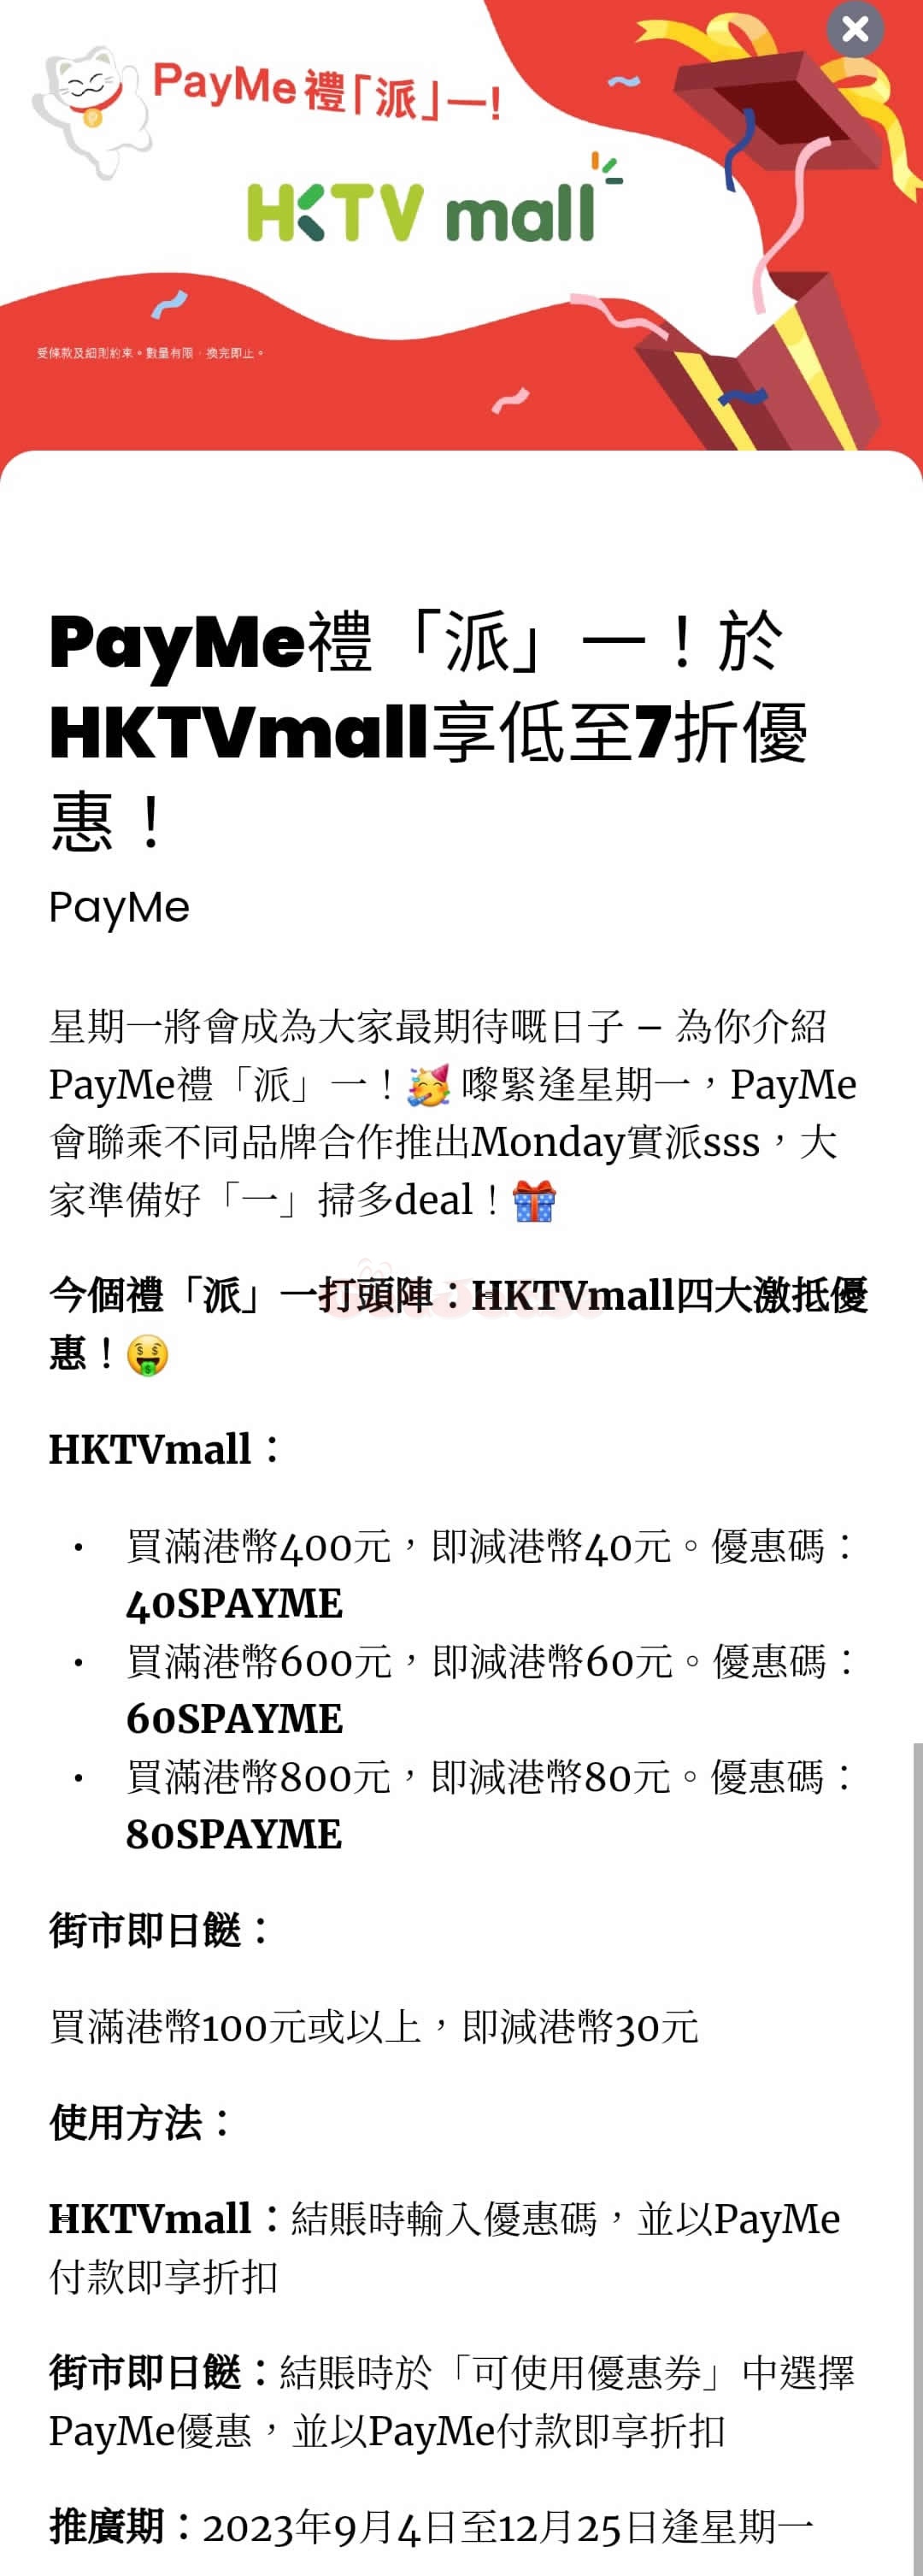 PayMe：HKTVmall 低至7折優惠@逢星期一(至23年12月25日)圖片1